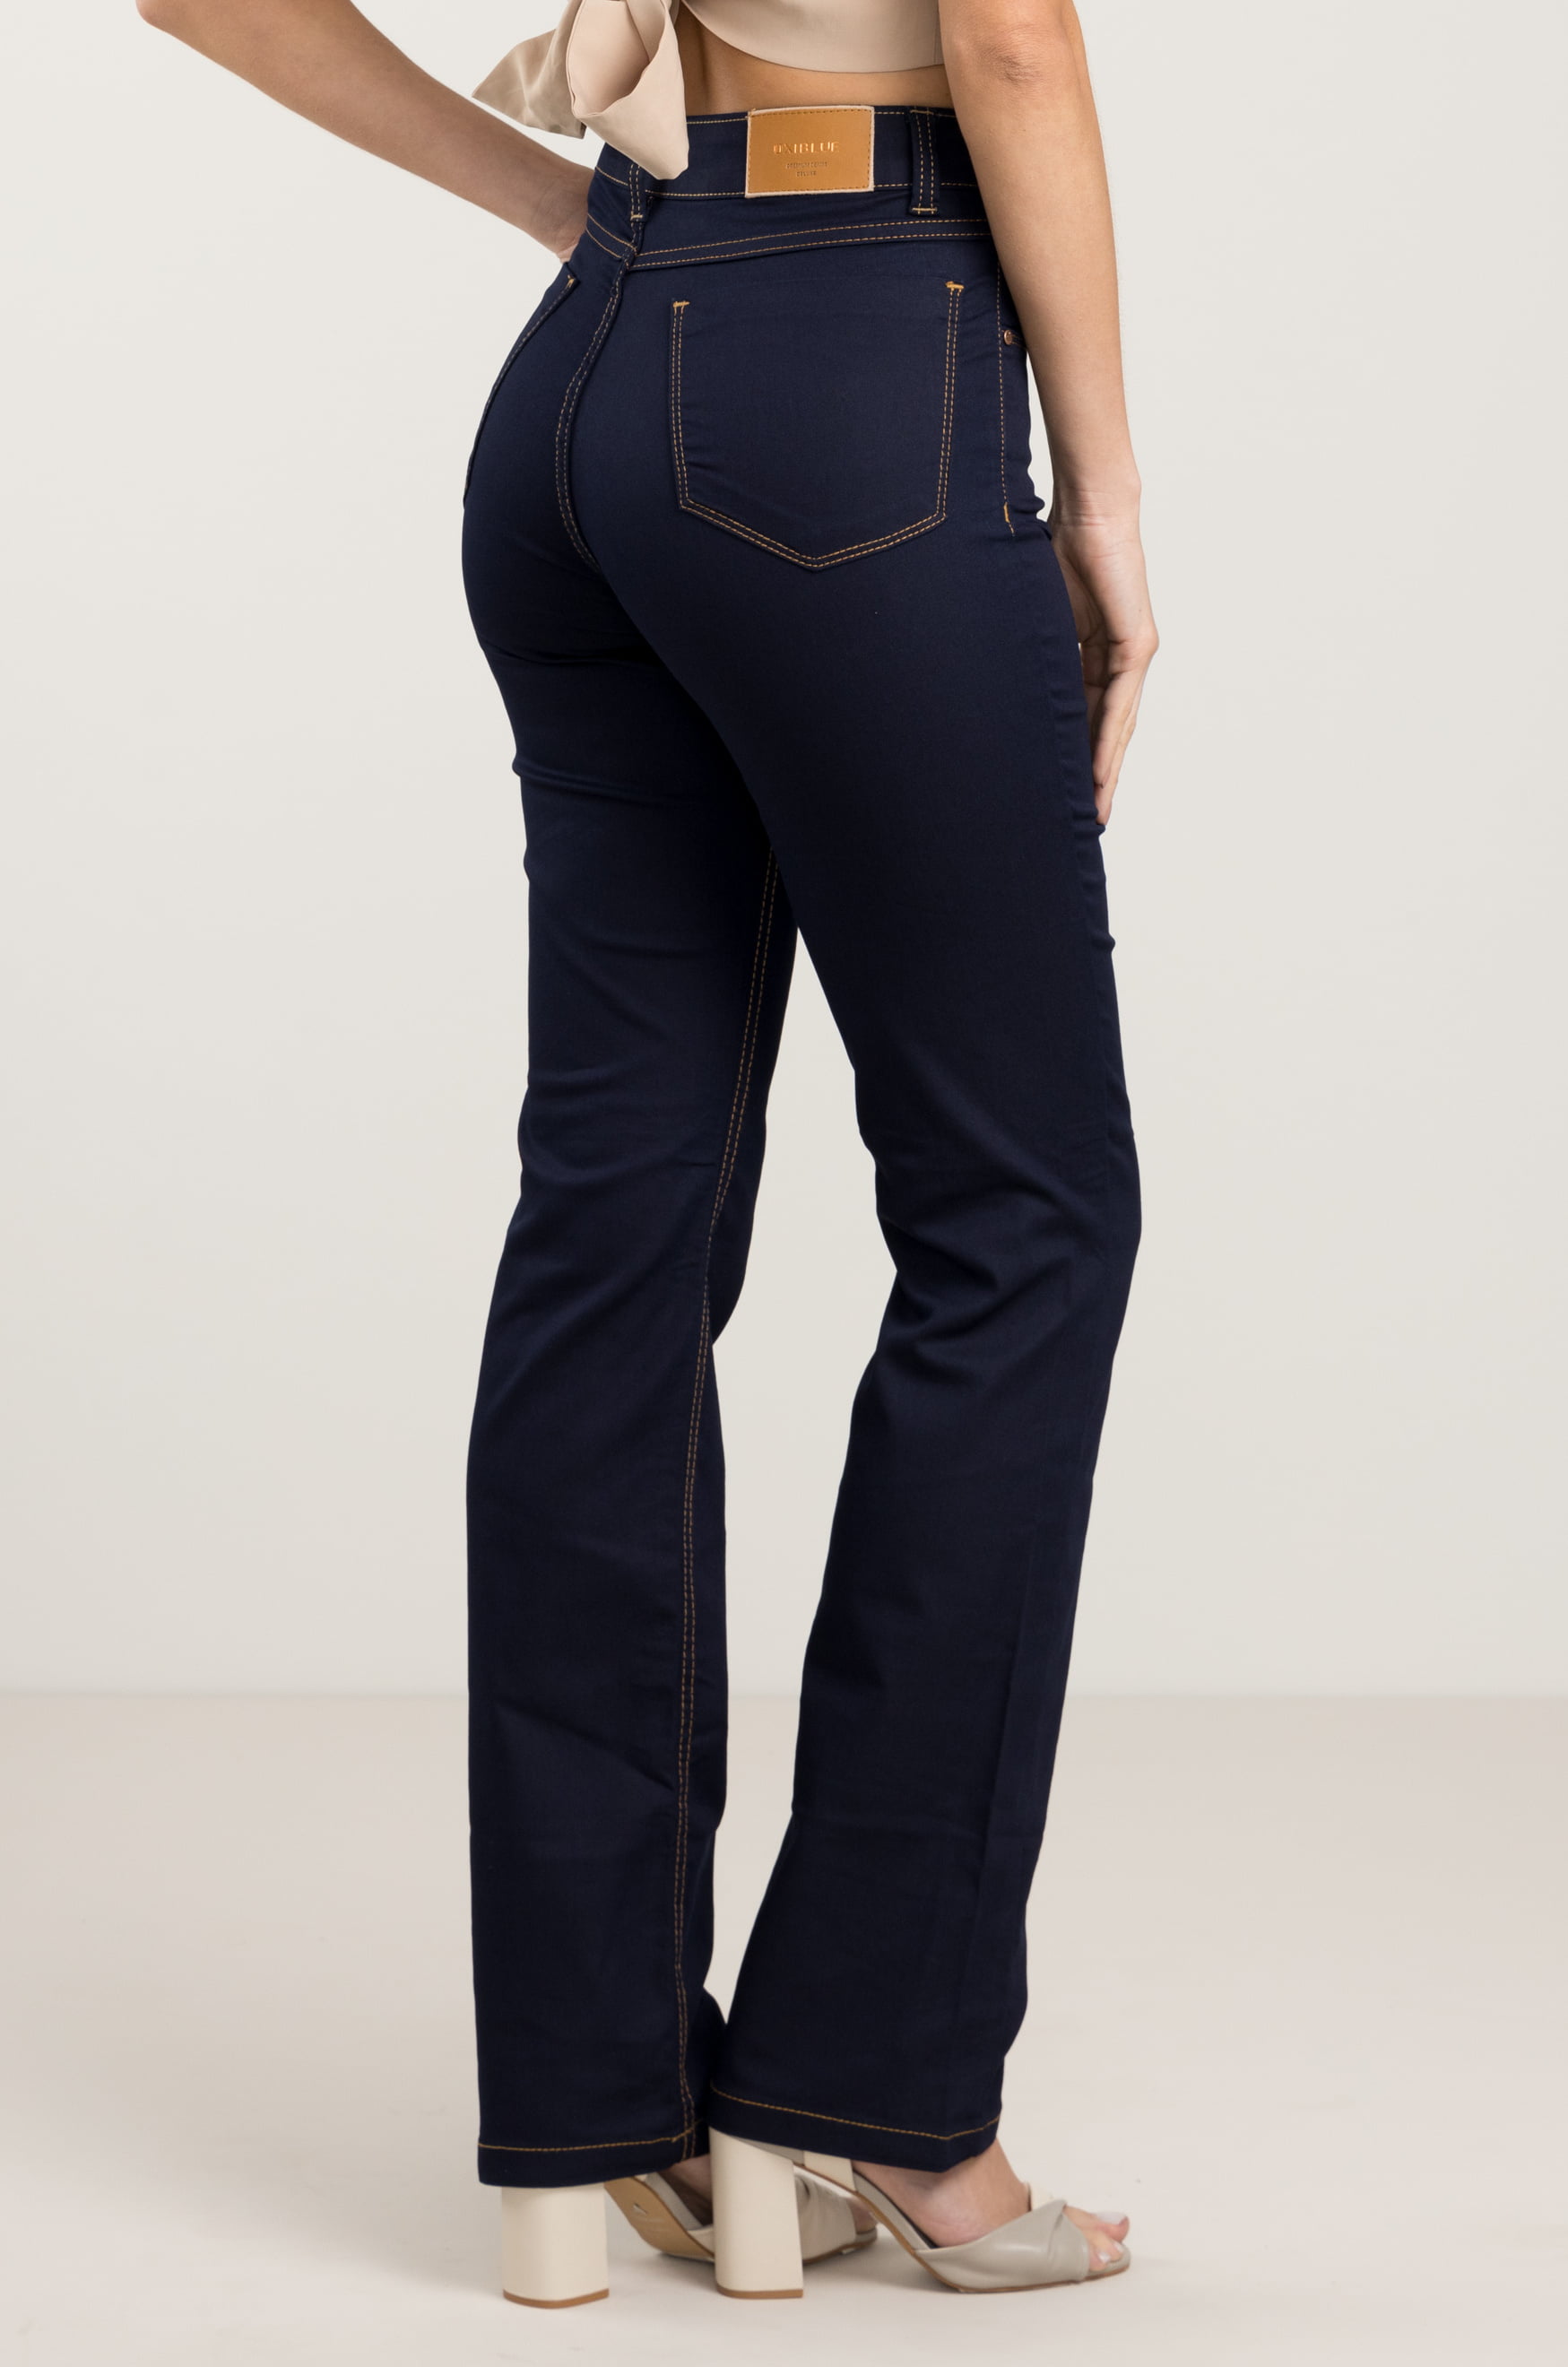 Calça Jeans Feminina Reta F2023090 - Oxiblue Jeans